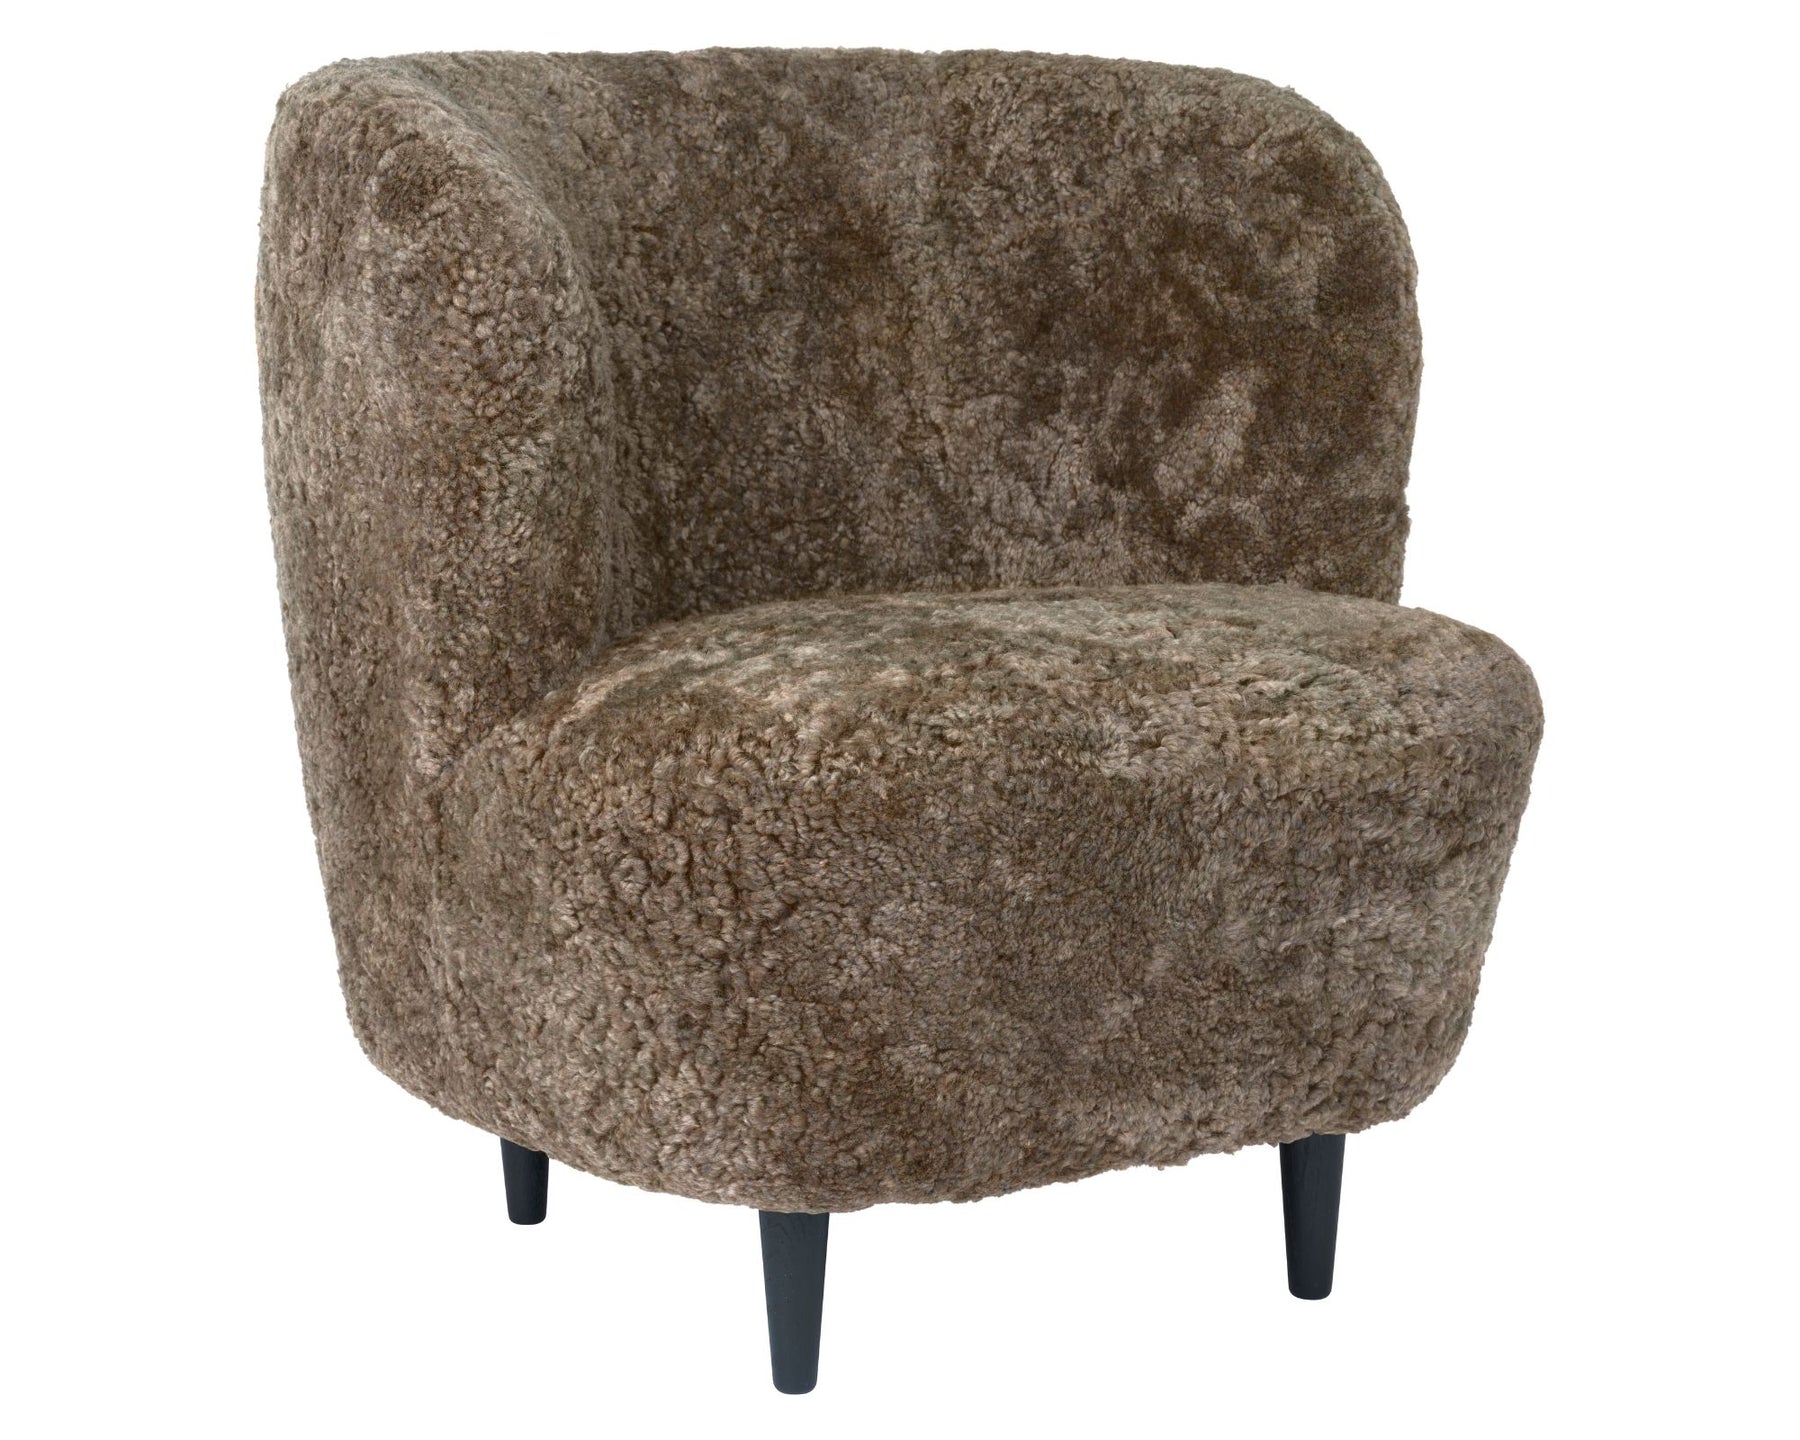 Stay Lounge Chair - Wood Base - Sheepskin